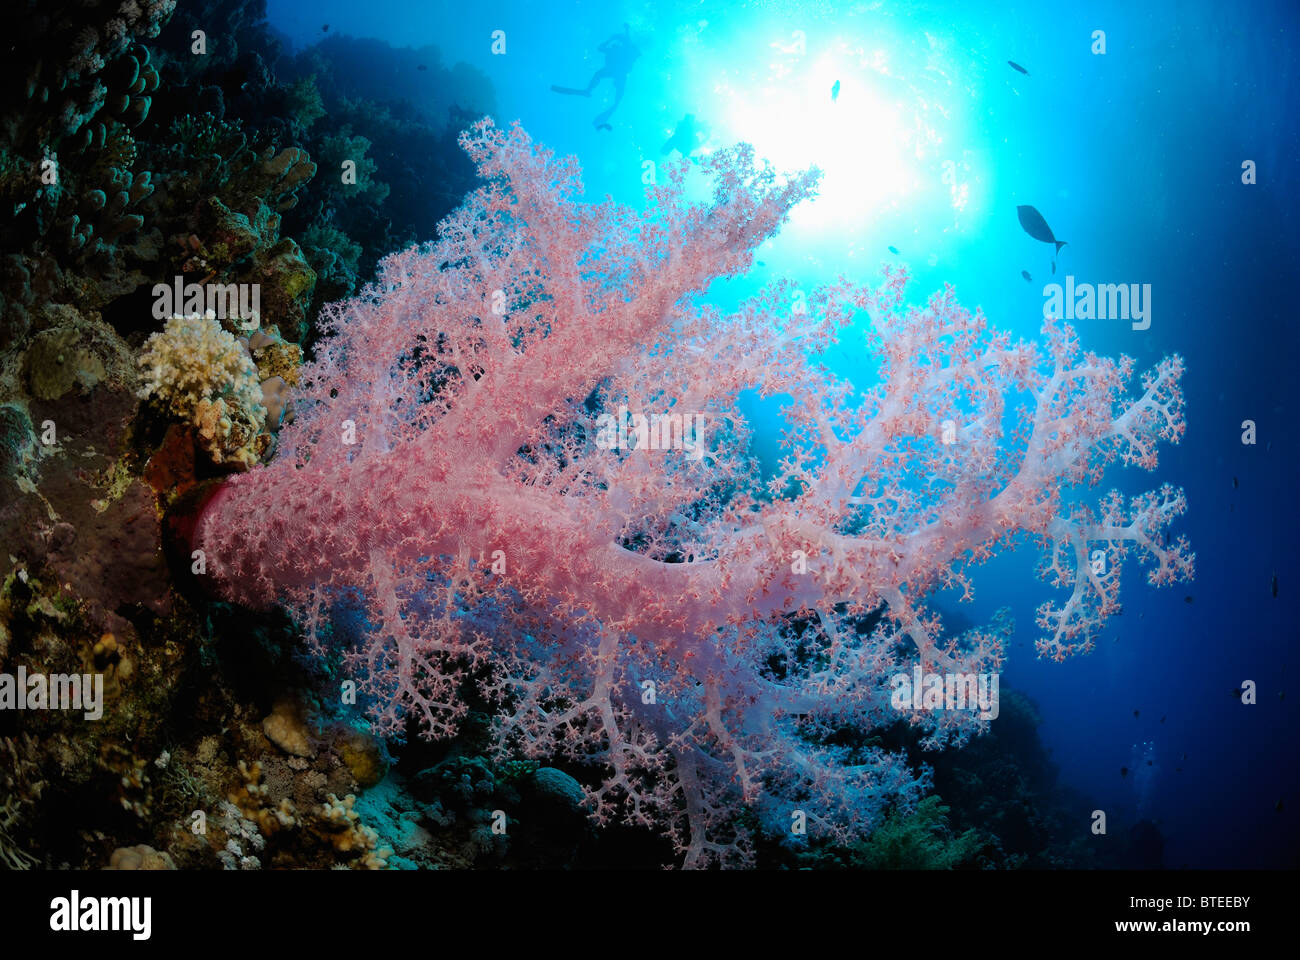 Soft coral colony, Scientific name Dendronephthya sp., off Safaga coast, Red Sea, Egypt, Stock Photo